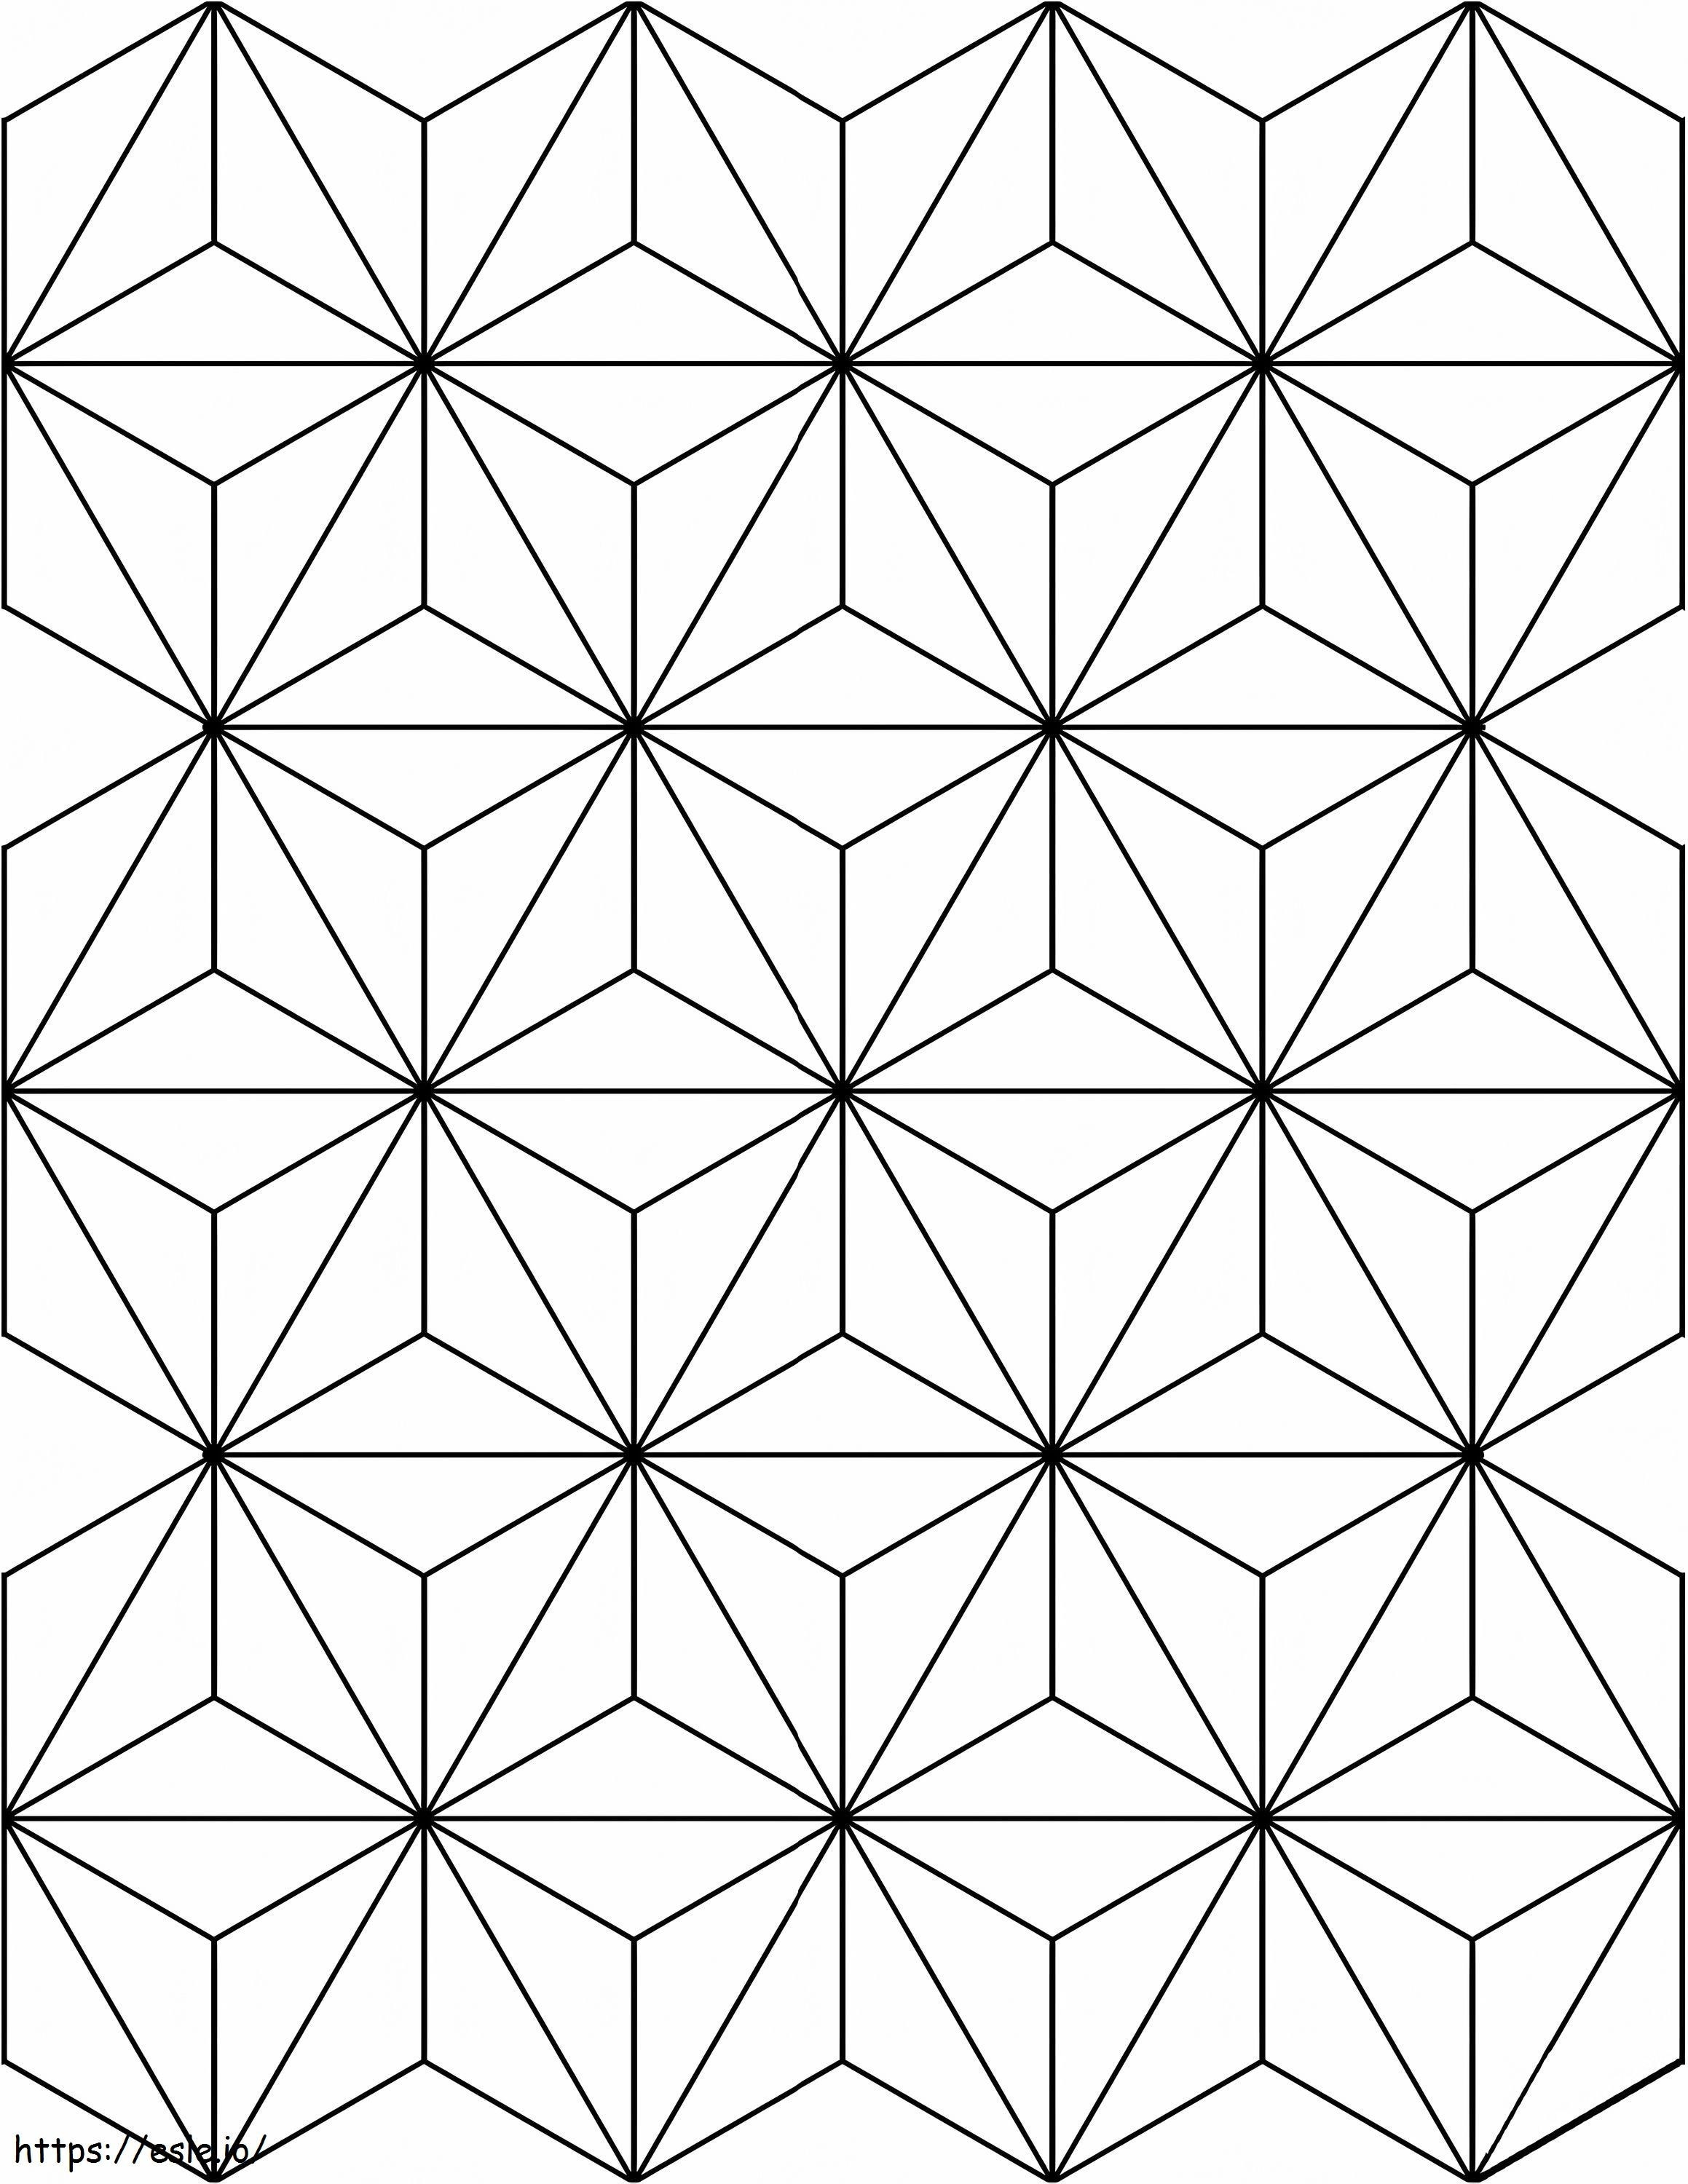  Asanoha-Muster ausmalbilder